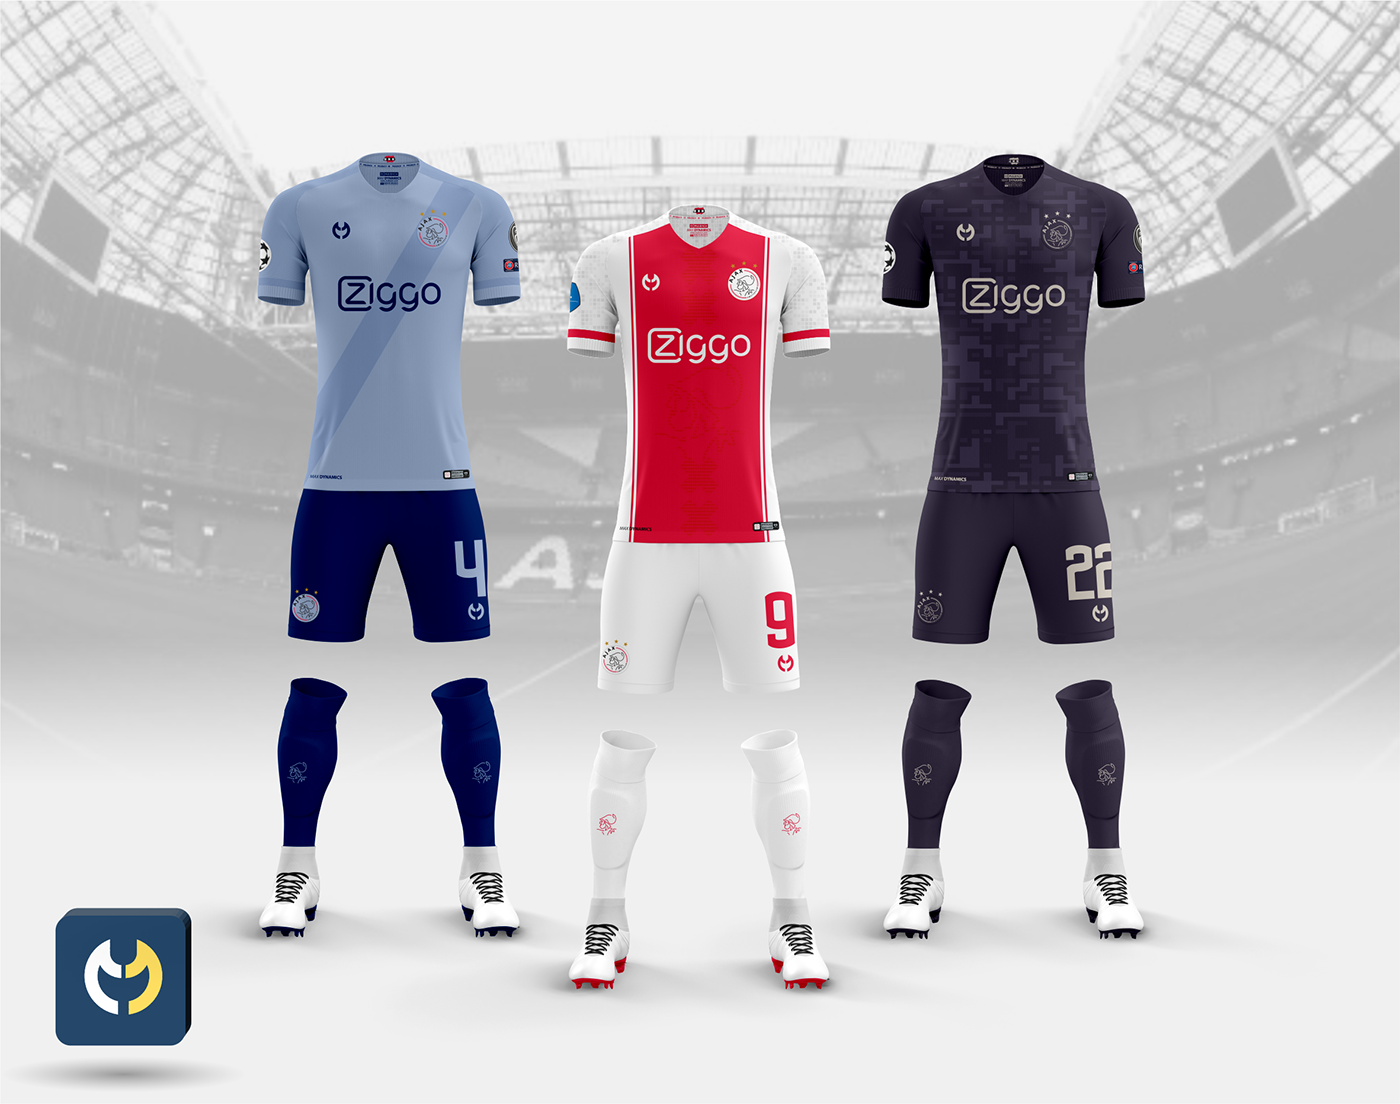 fonds Outlook ongezond Ajax Amsterdam 2020/2021 Mulbach Kits Concept on Behance